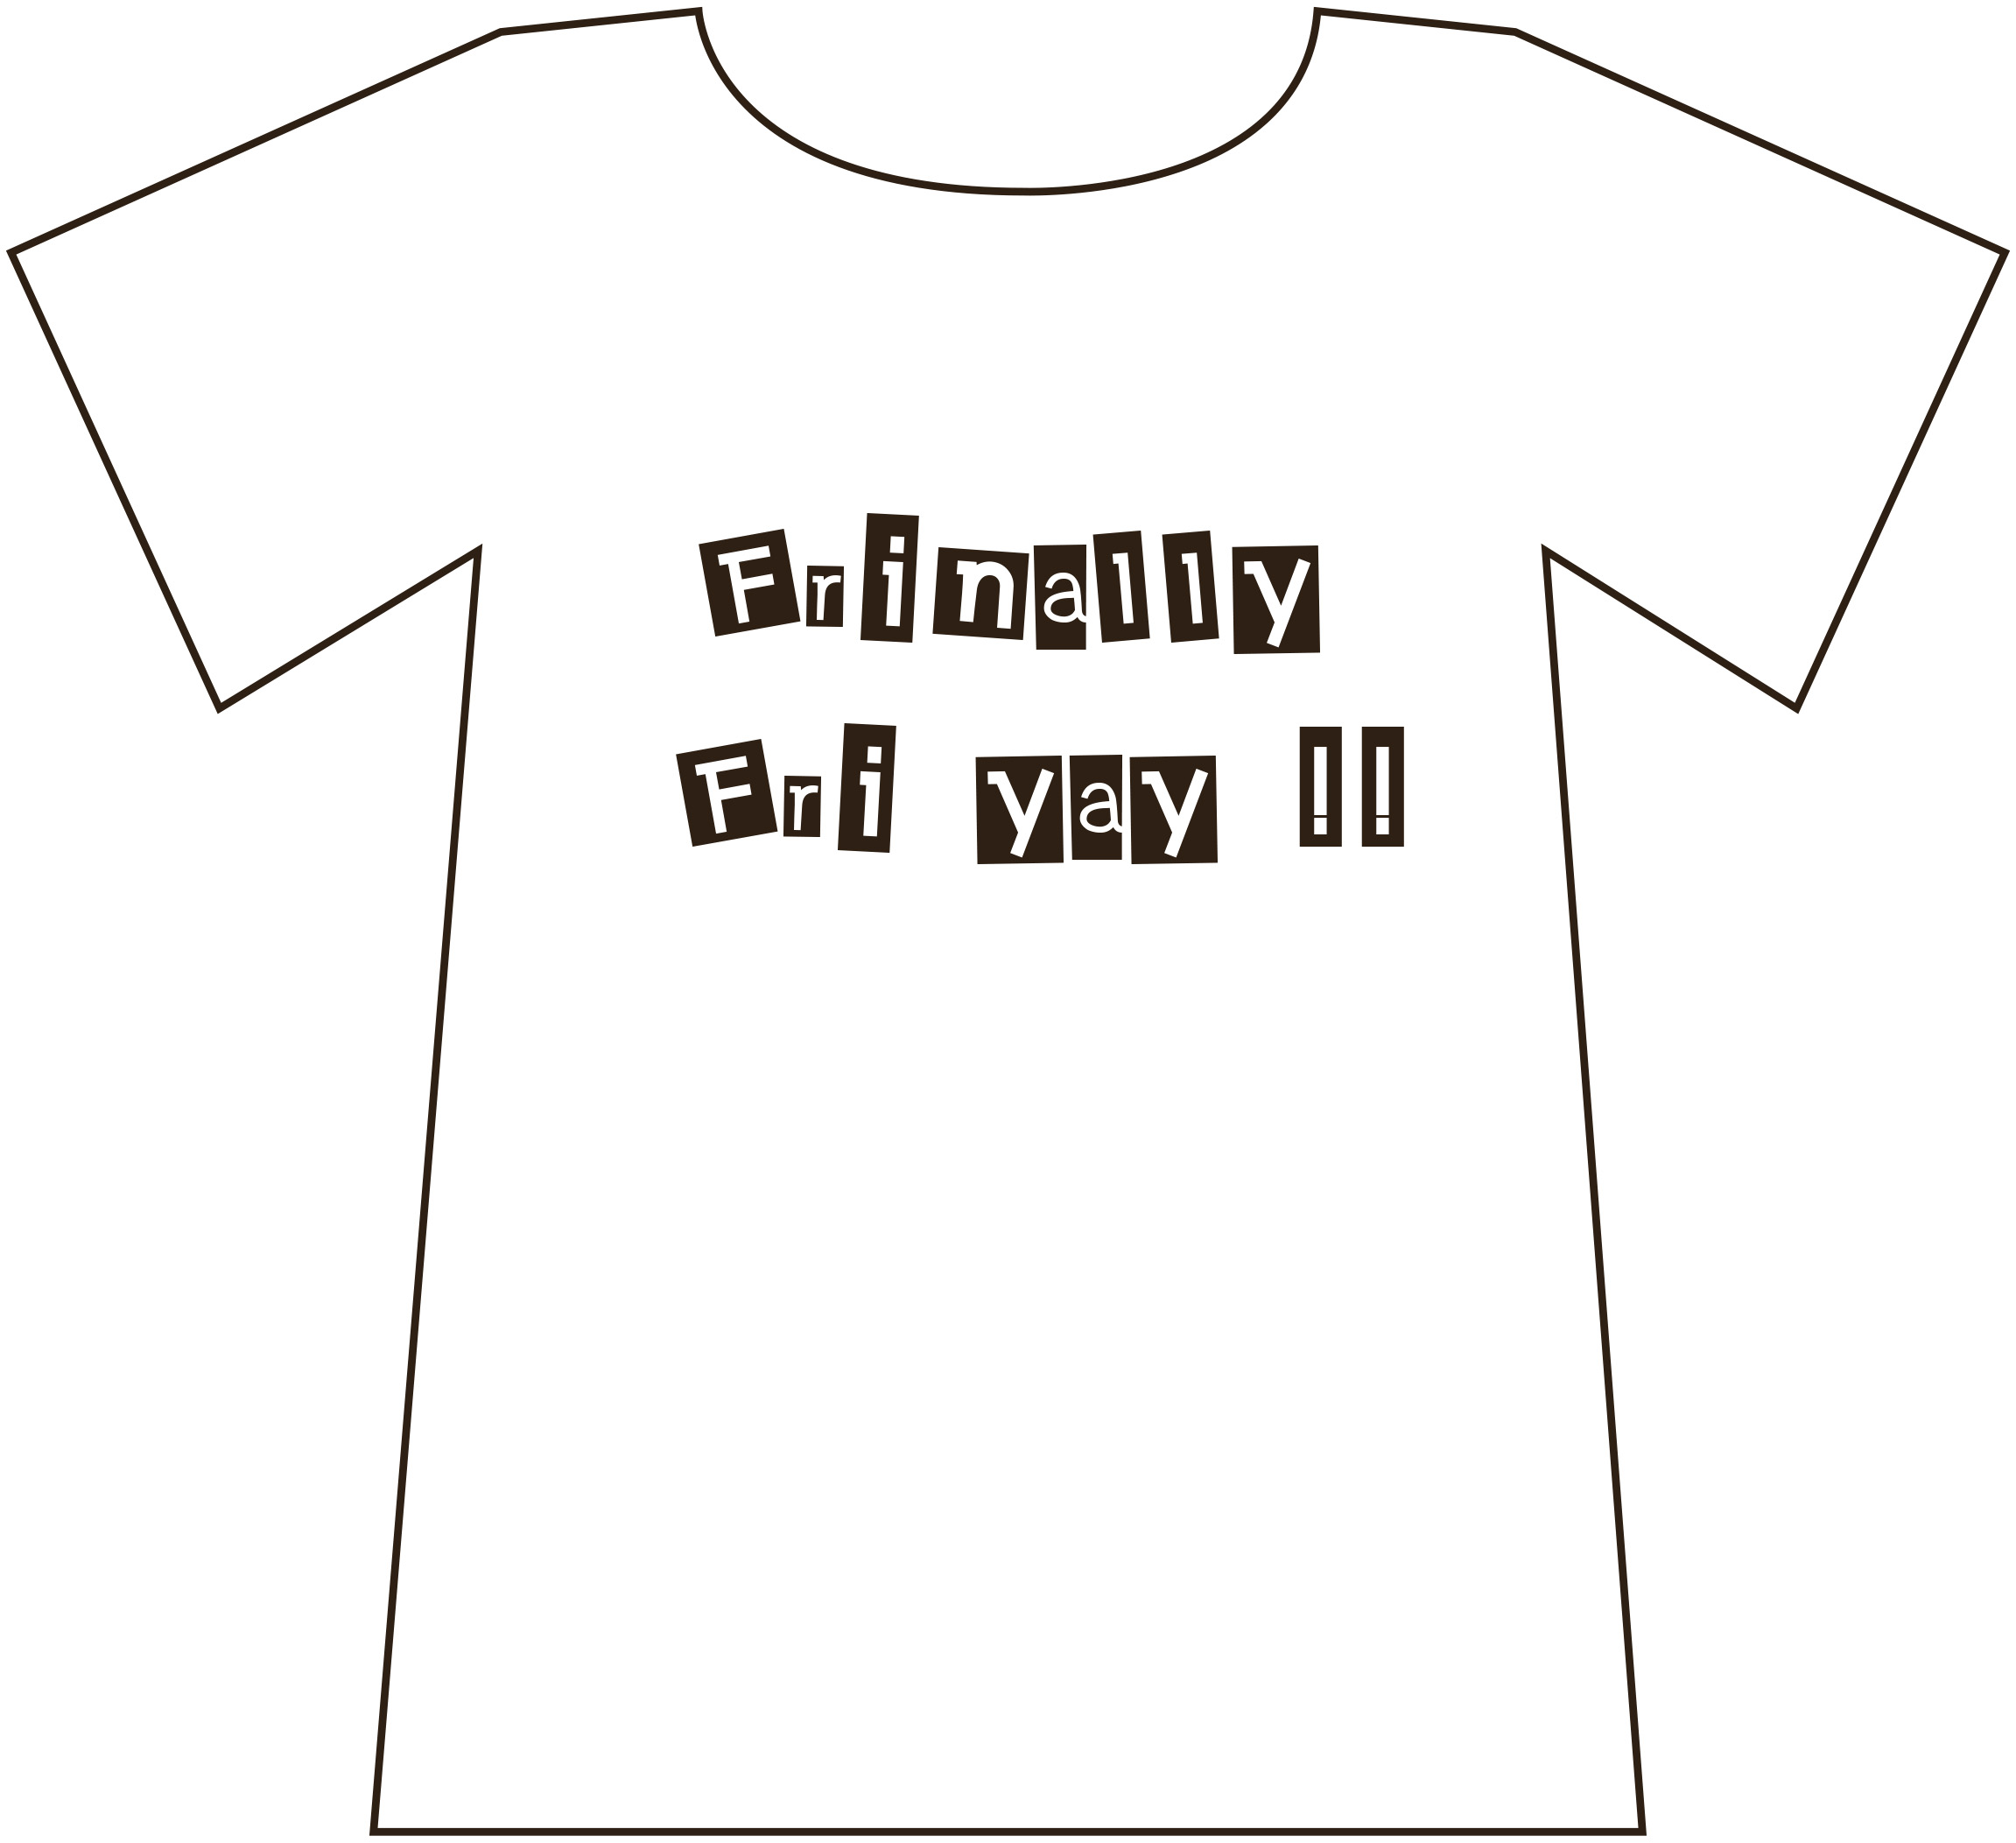 t-shirt wit O hals "frinally friyay"